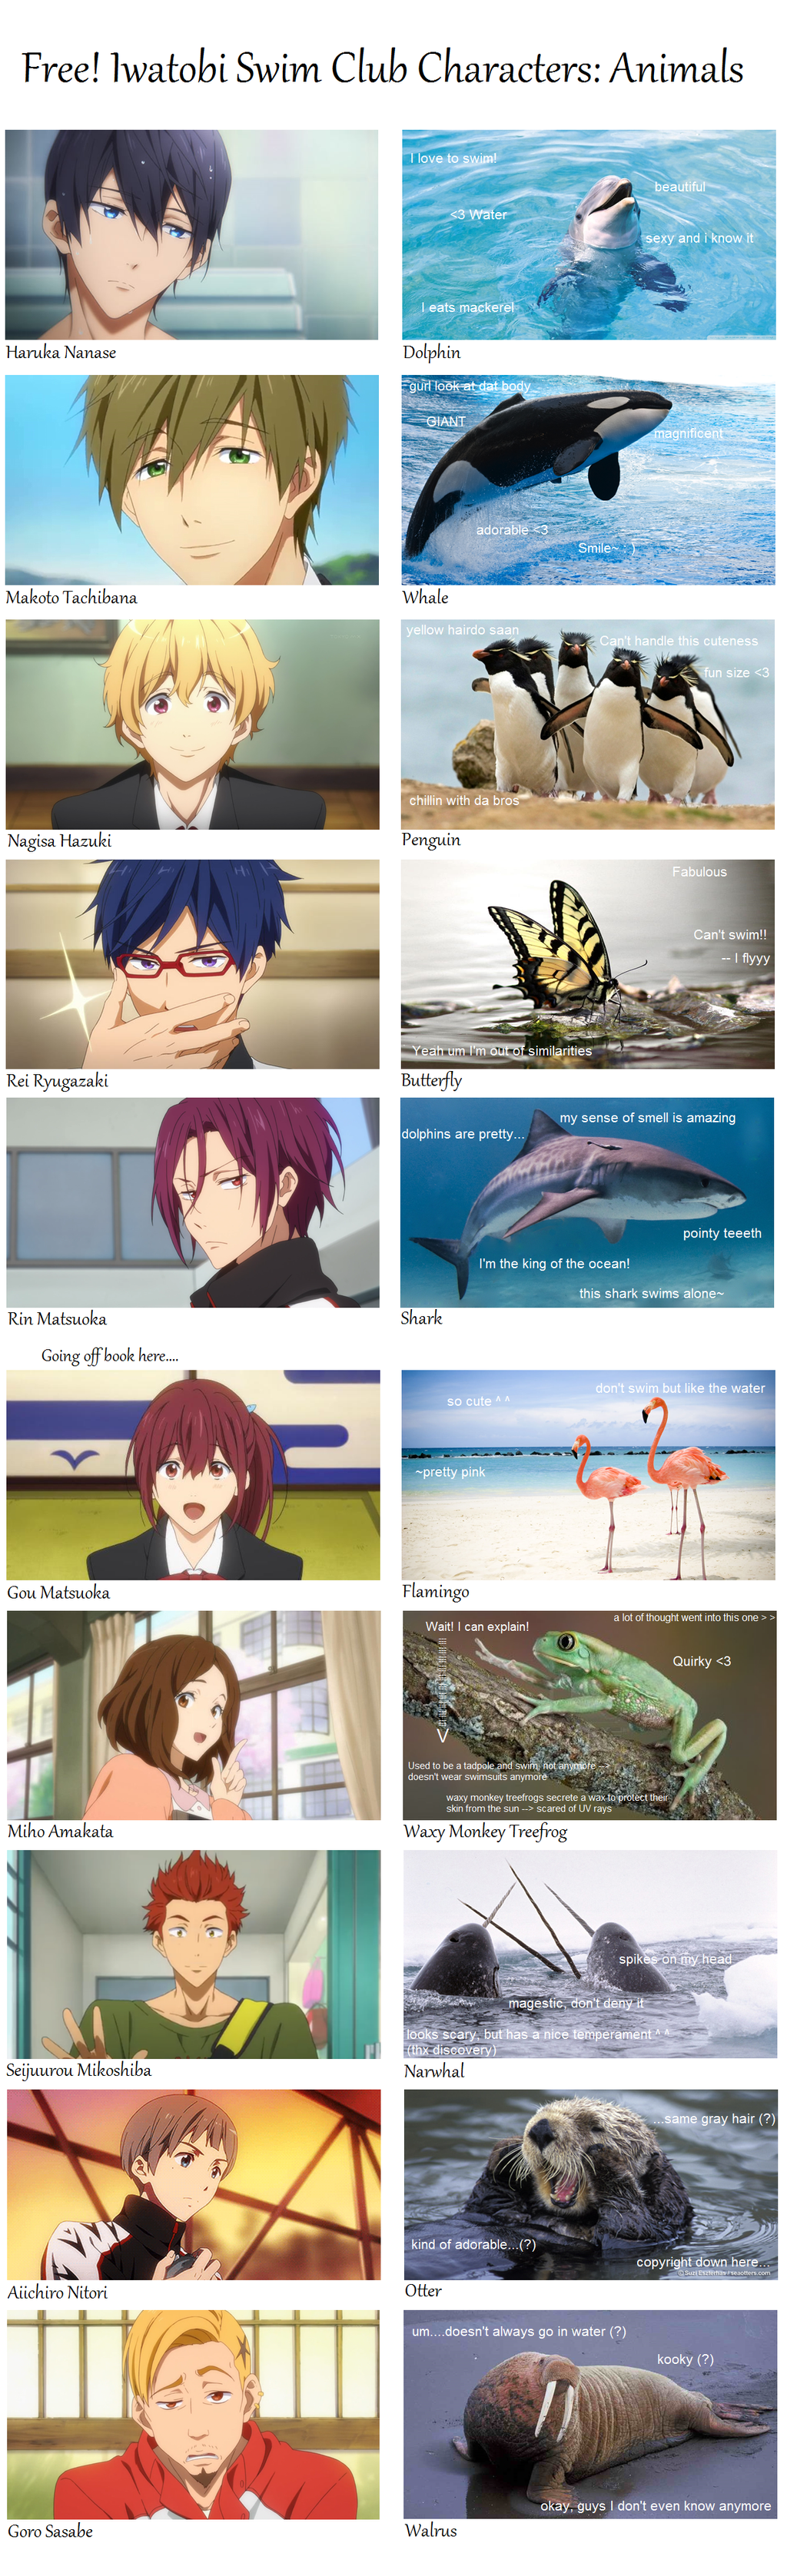 Free! Iwatobi Swim Club Characters: Animals by FrozenClaws on DeviantArt